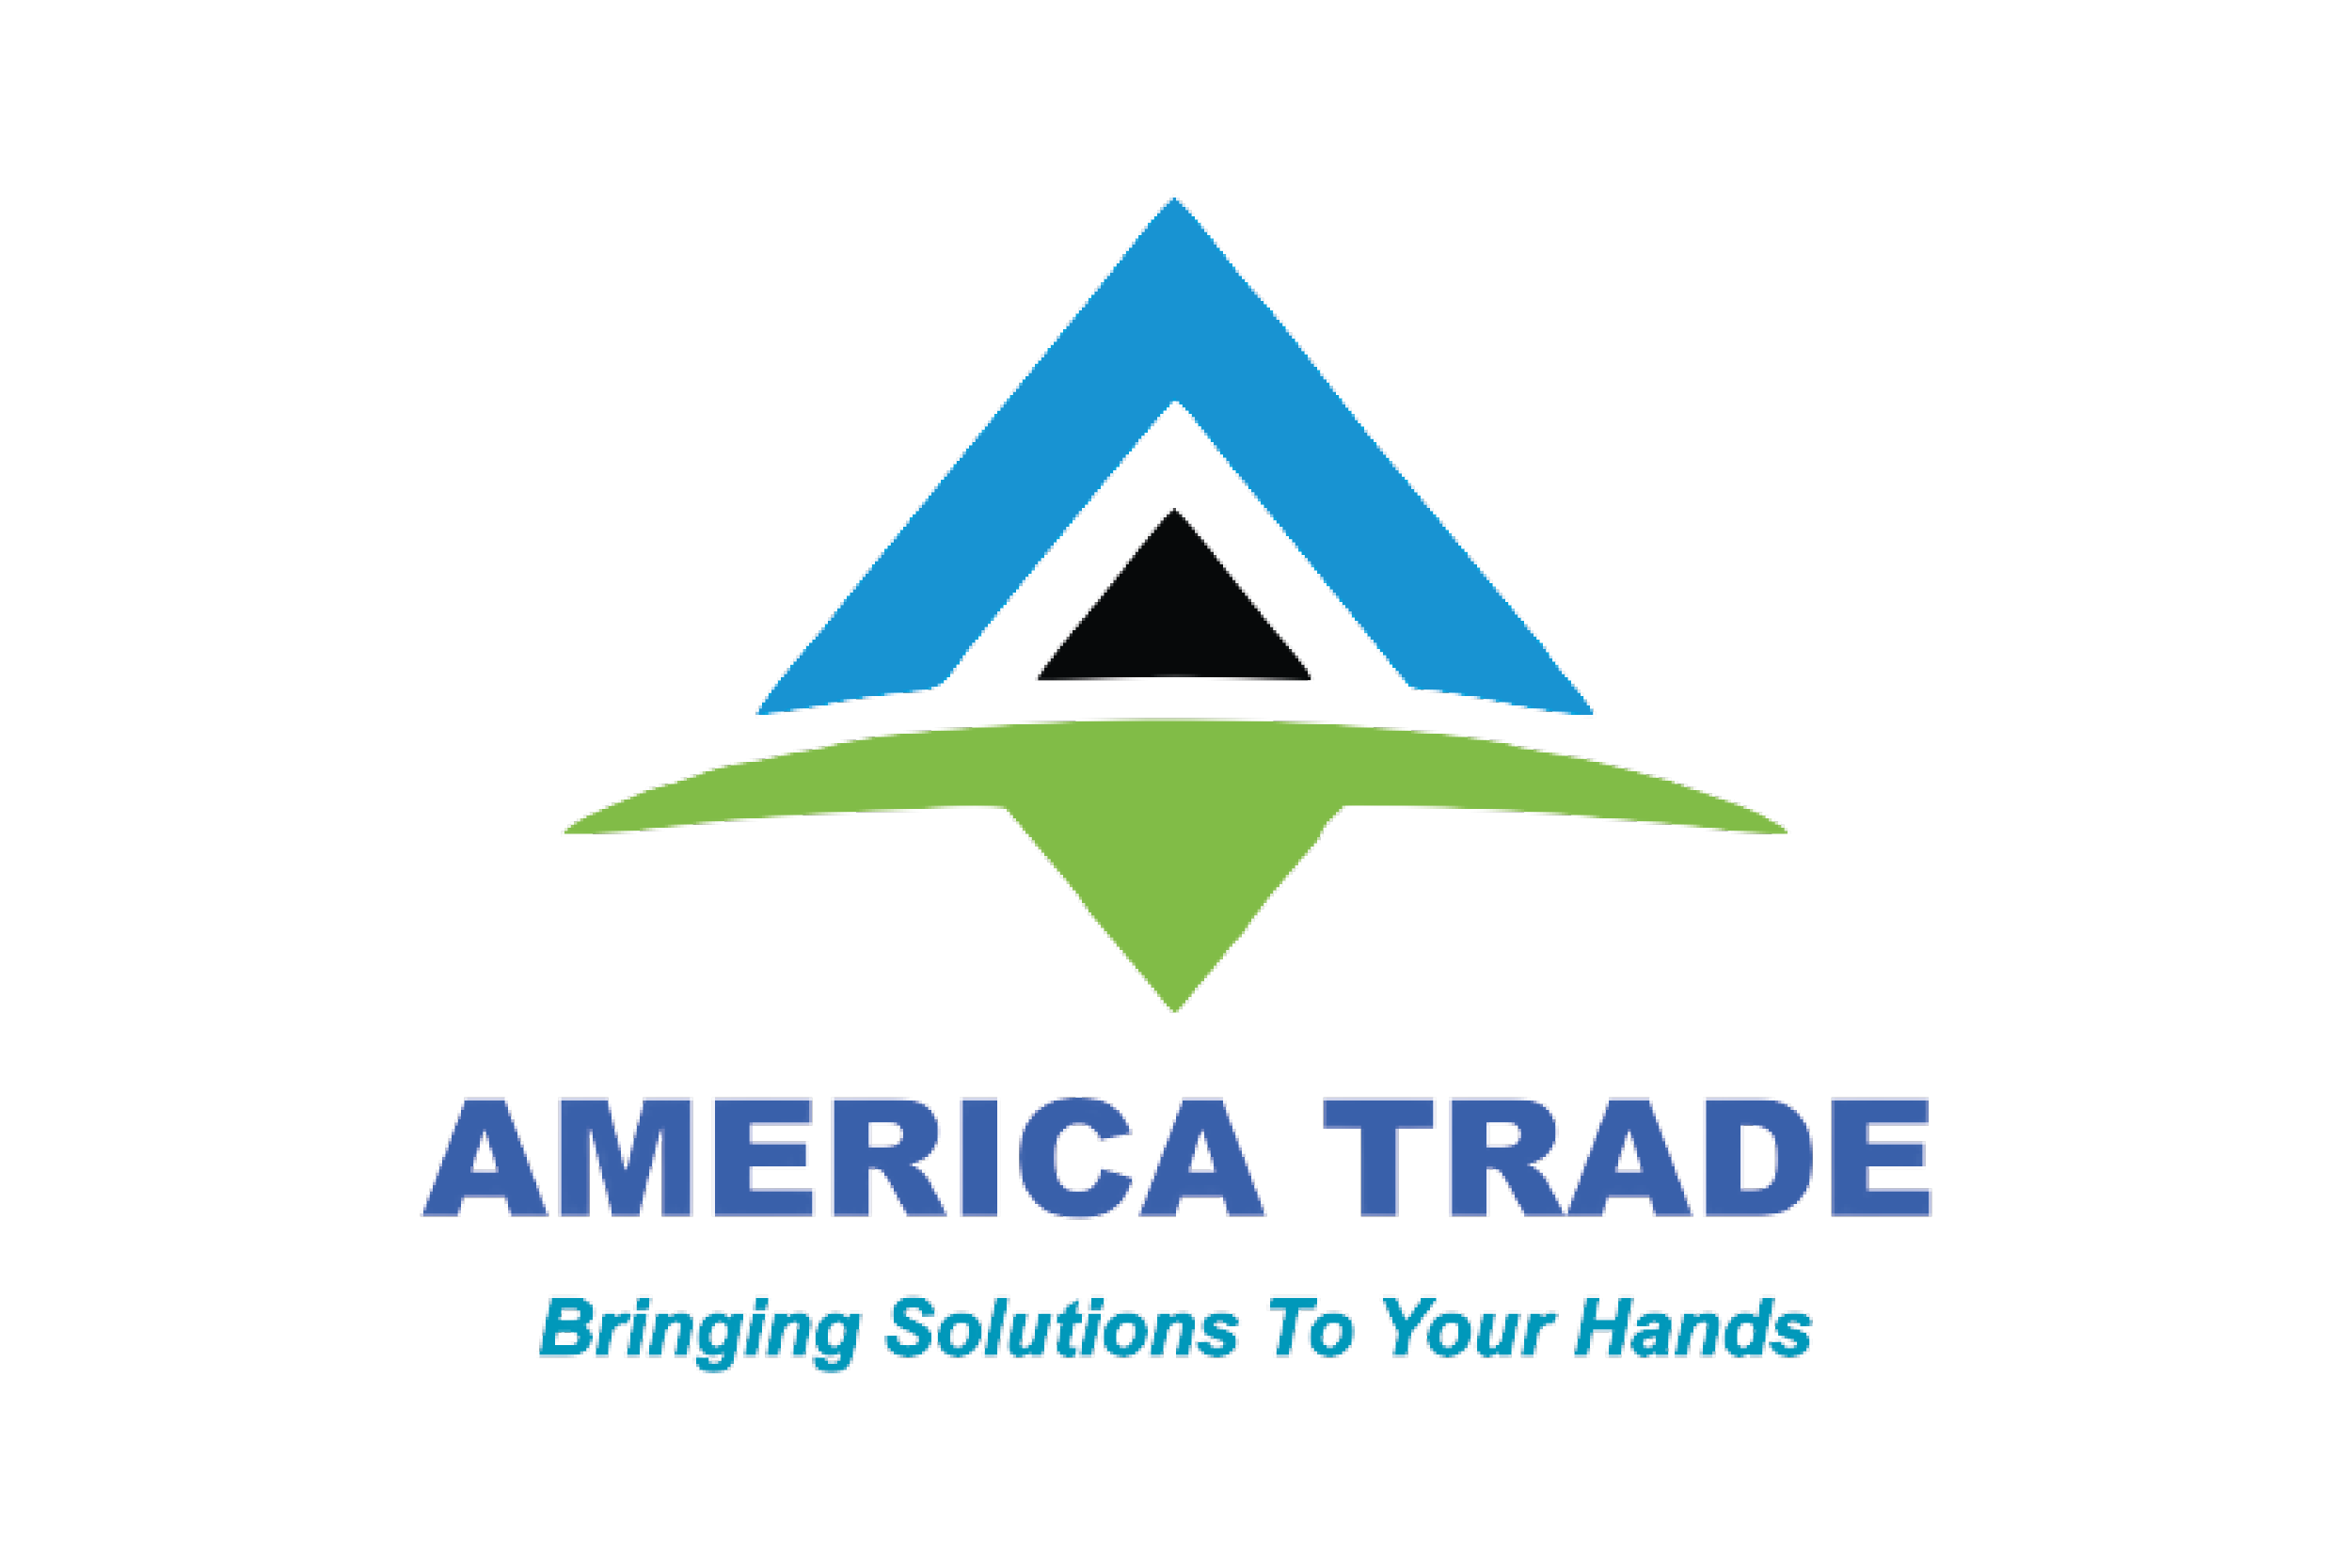 Logo America Trade